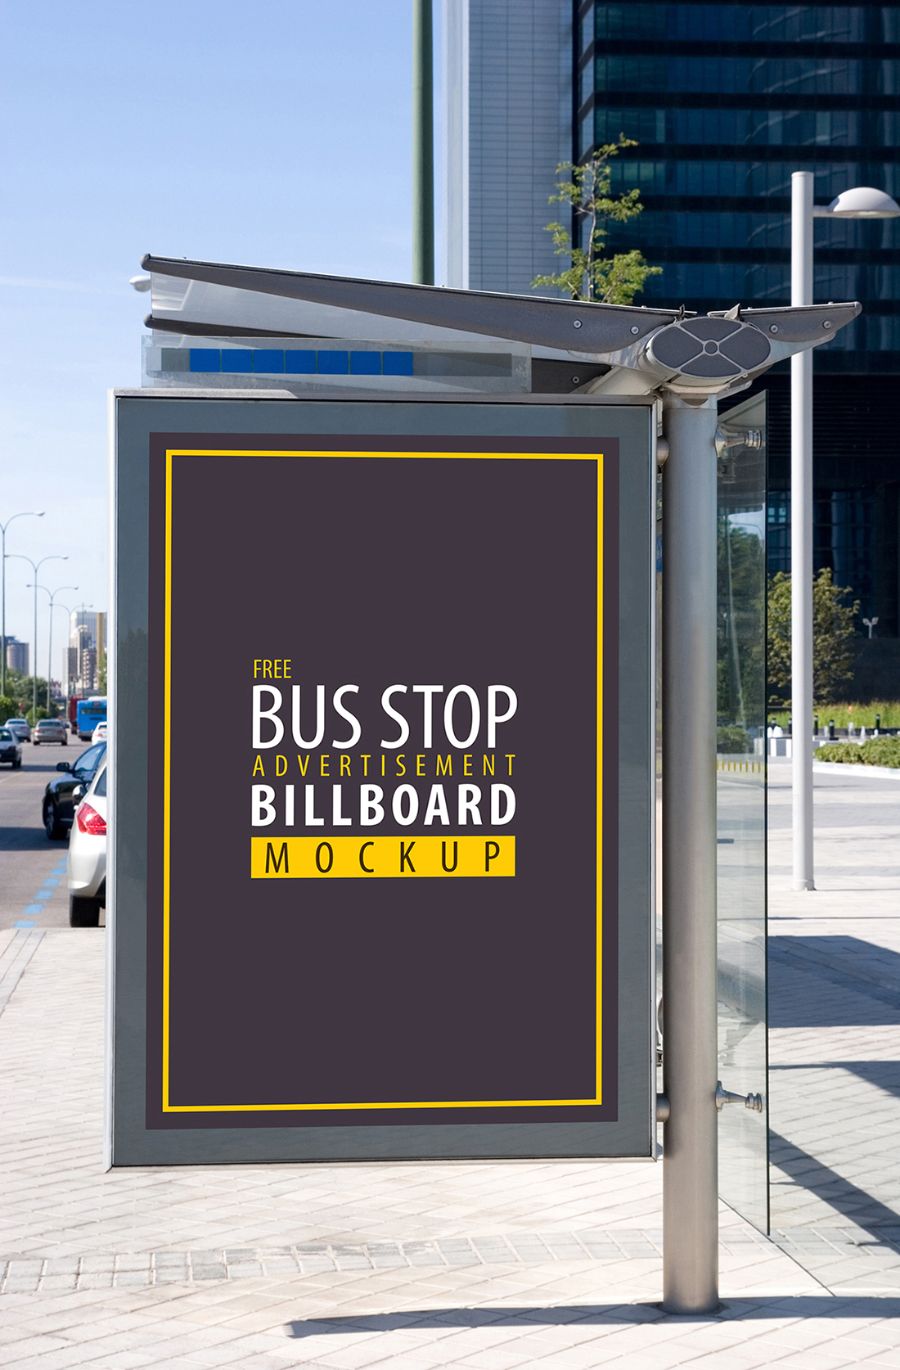 Free Bus Stop Advertisement Mockup Free Design Resources Bus Stop Advertising Bus Stop Mockup